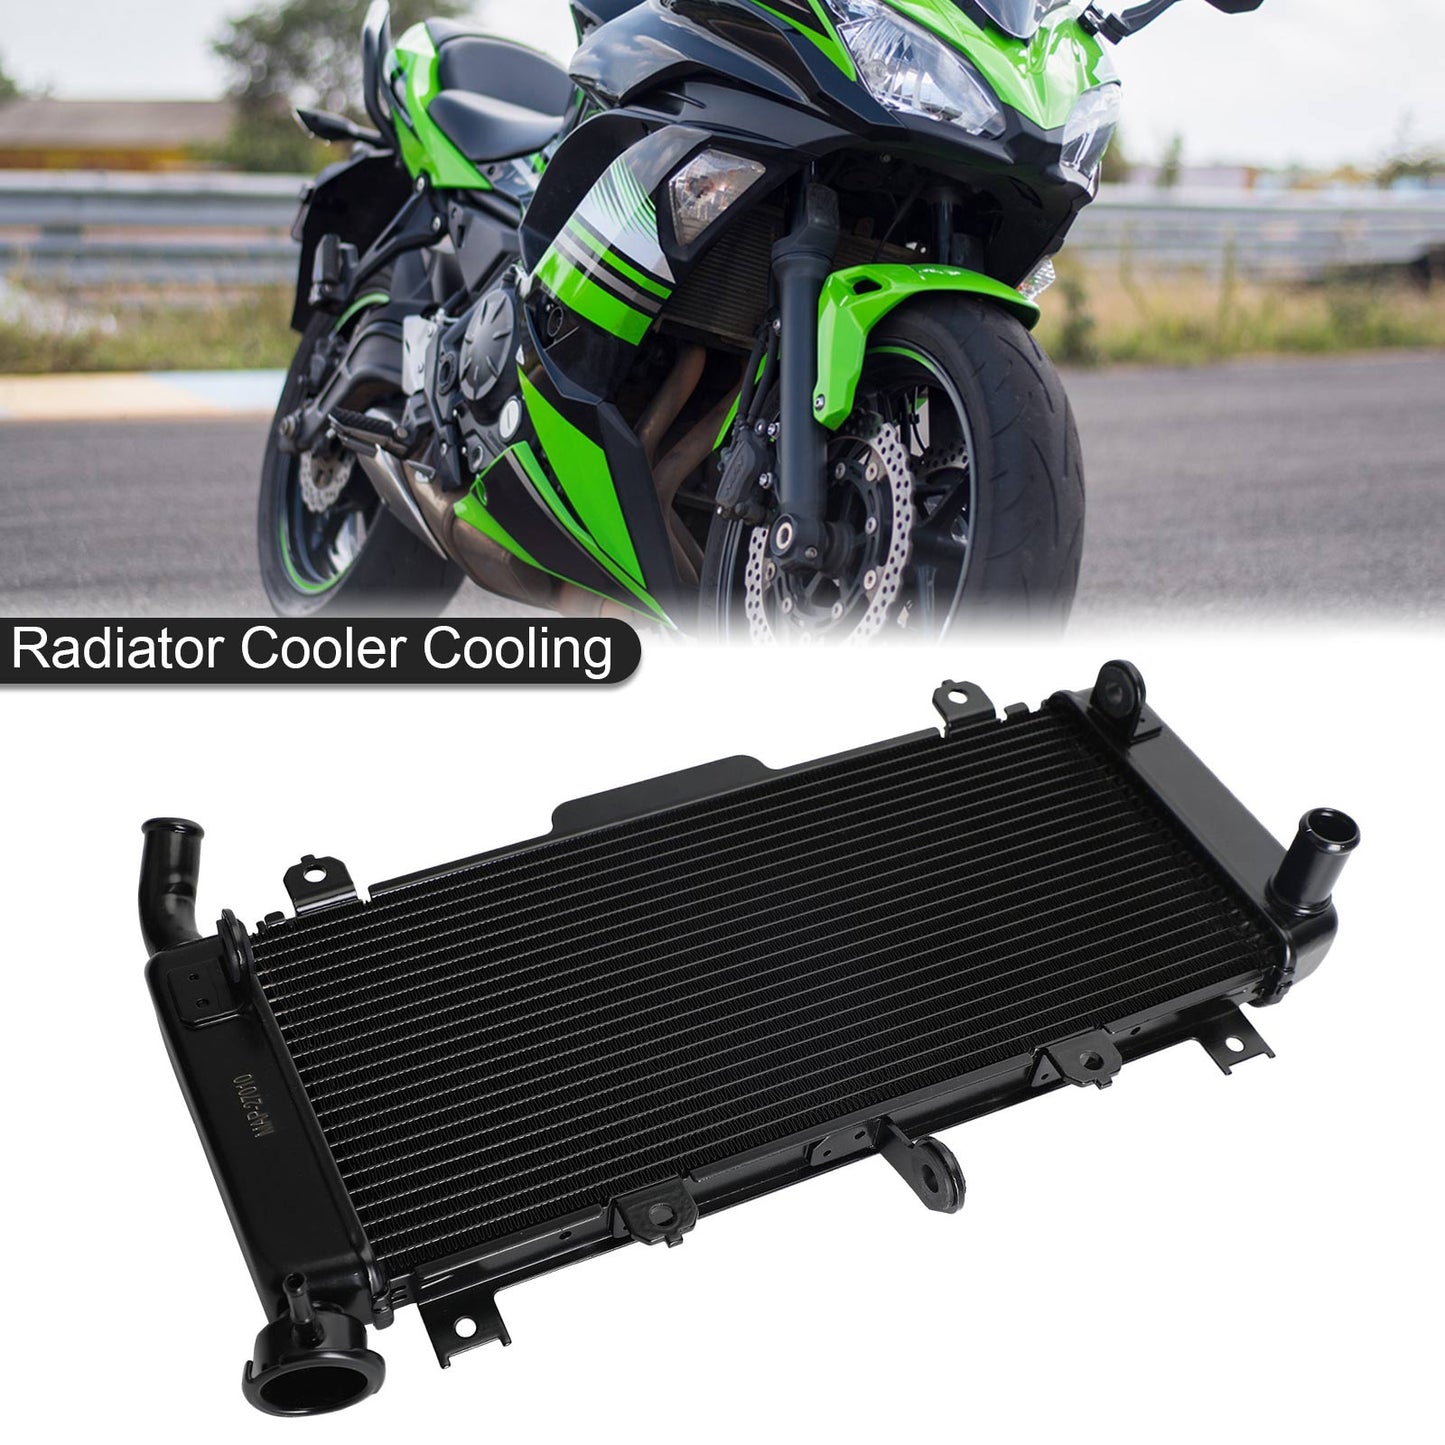 Radiator Cooler Cooling Fit For Kawasaki Ninja 650 Z650 ER650 2017-2021